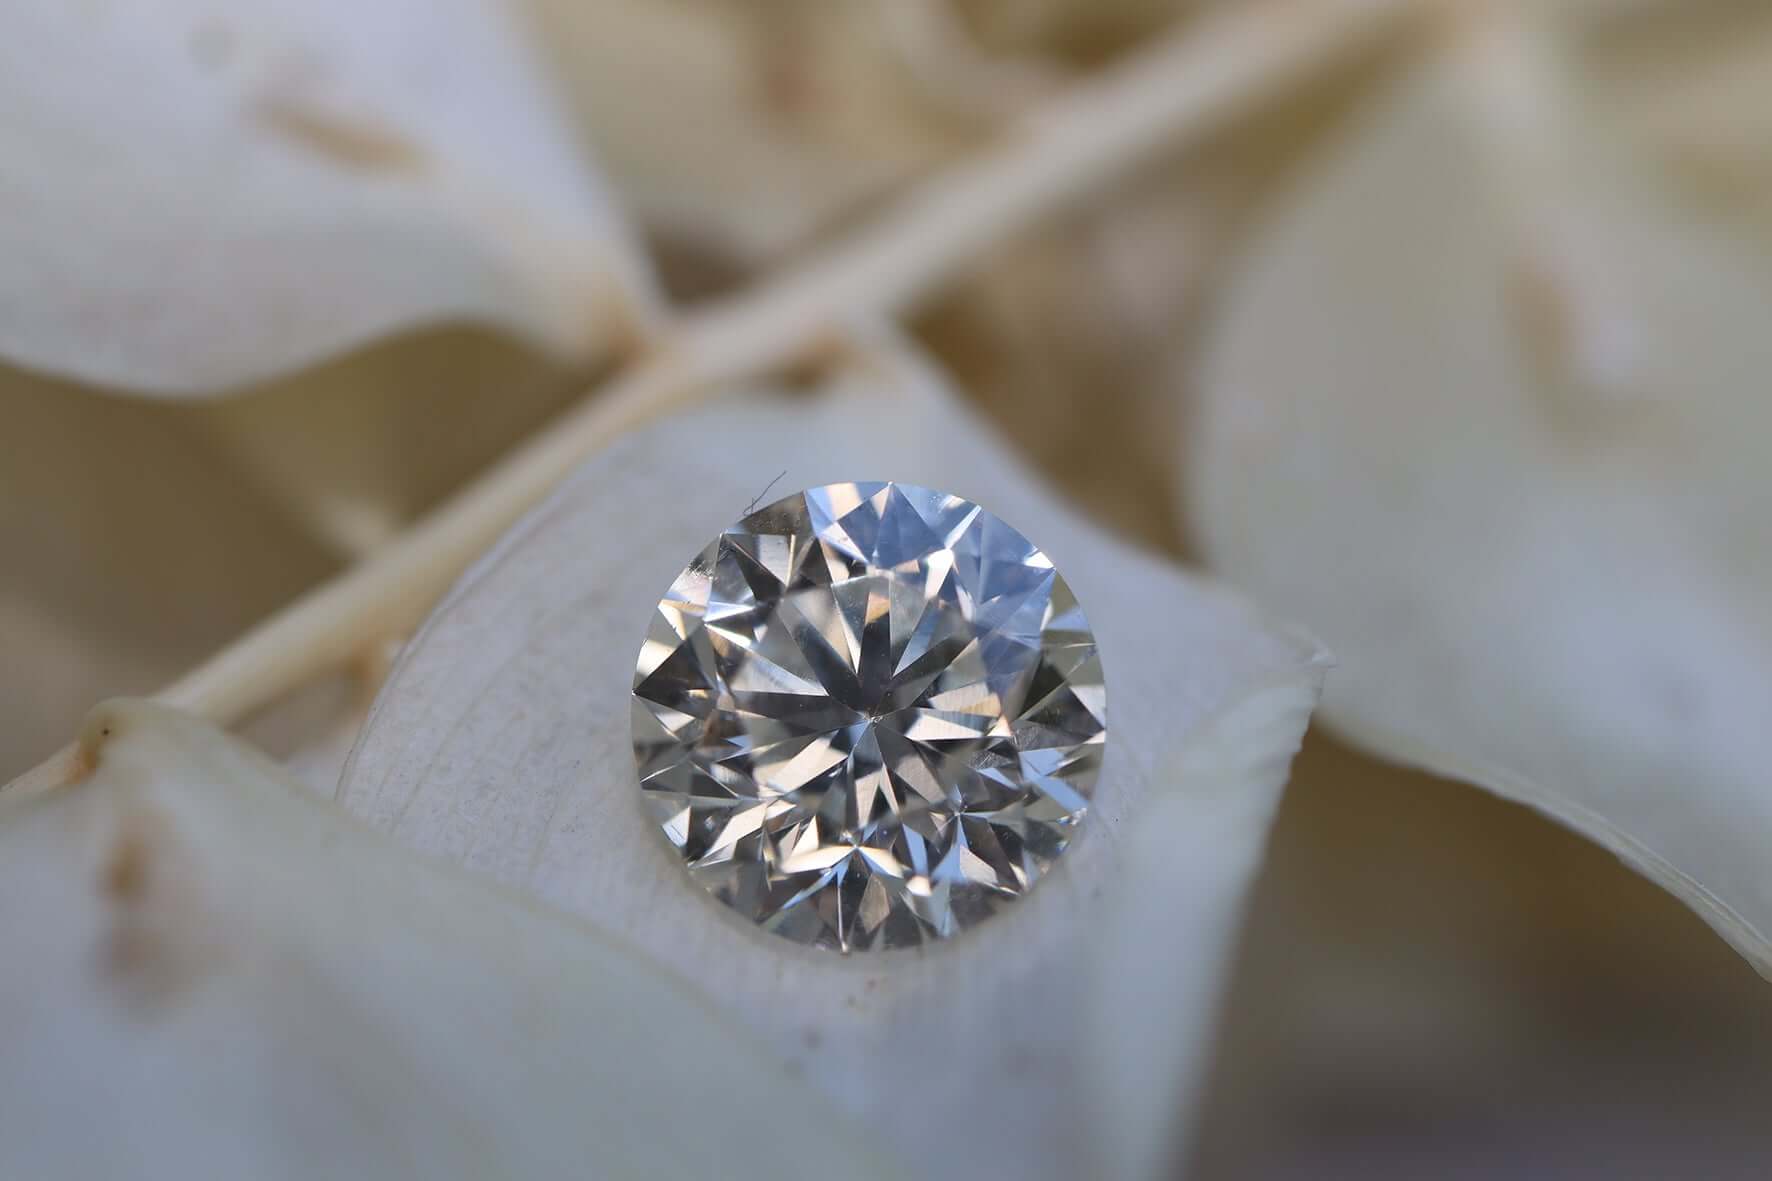 Diamond Details